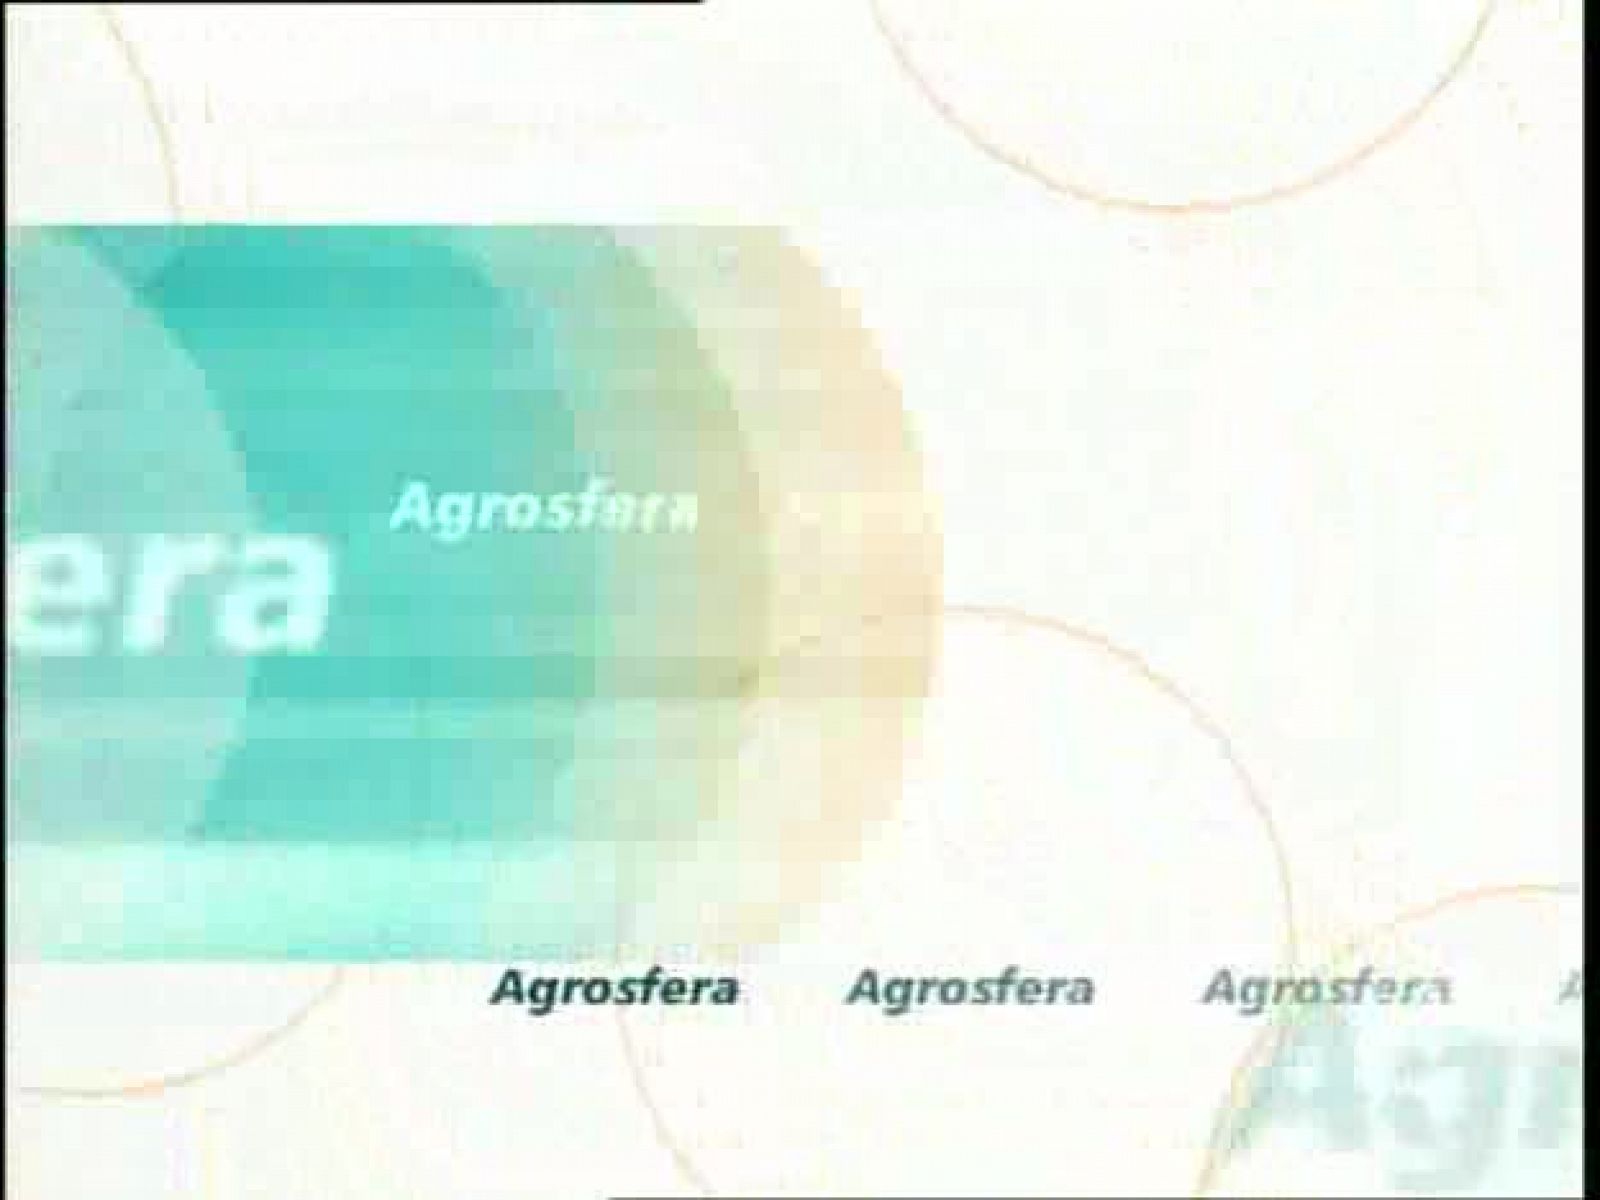 Agrosfera - 31/05/08